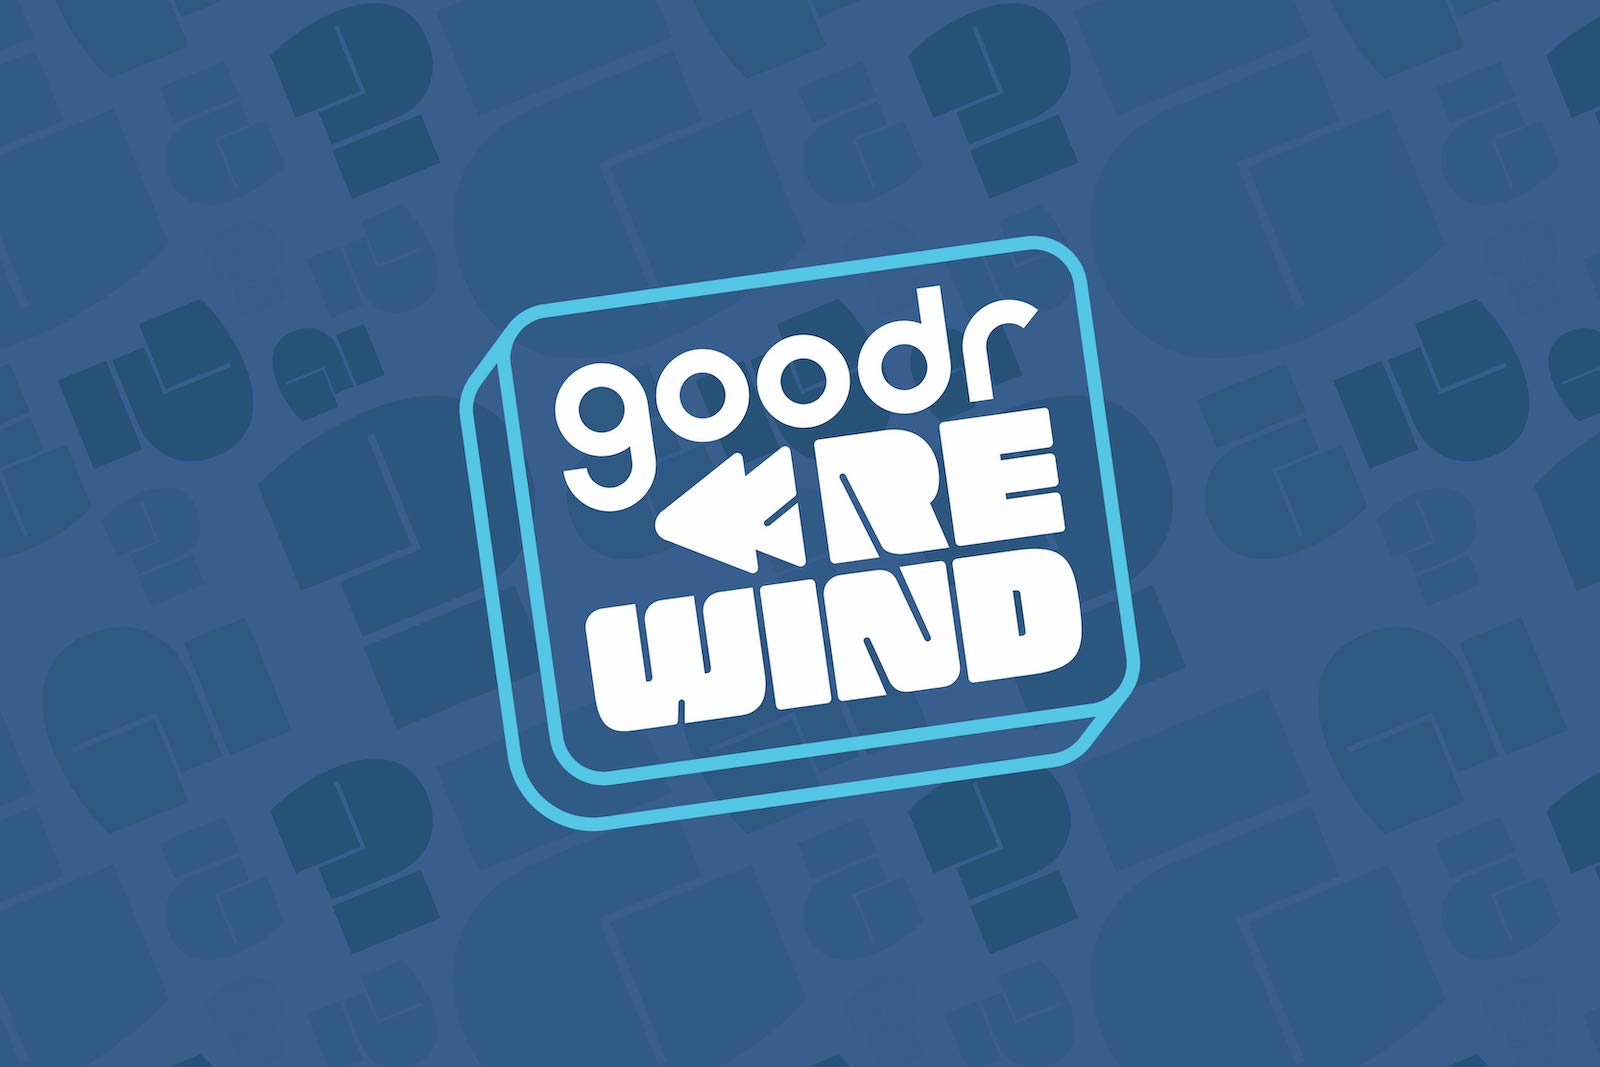 Introducing goodr Rewind